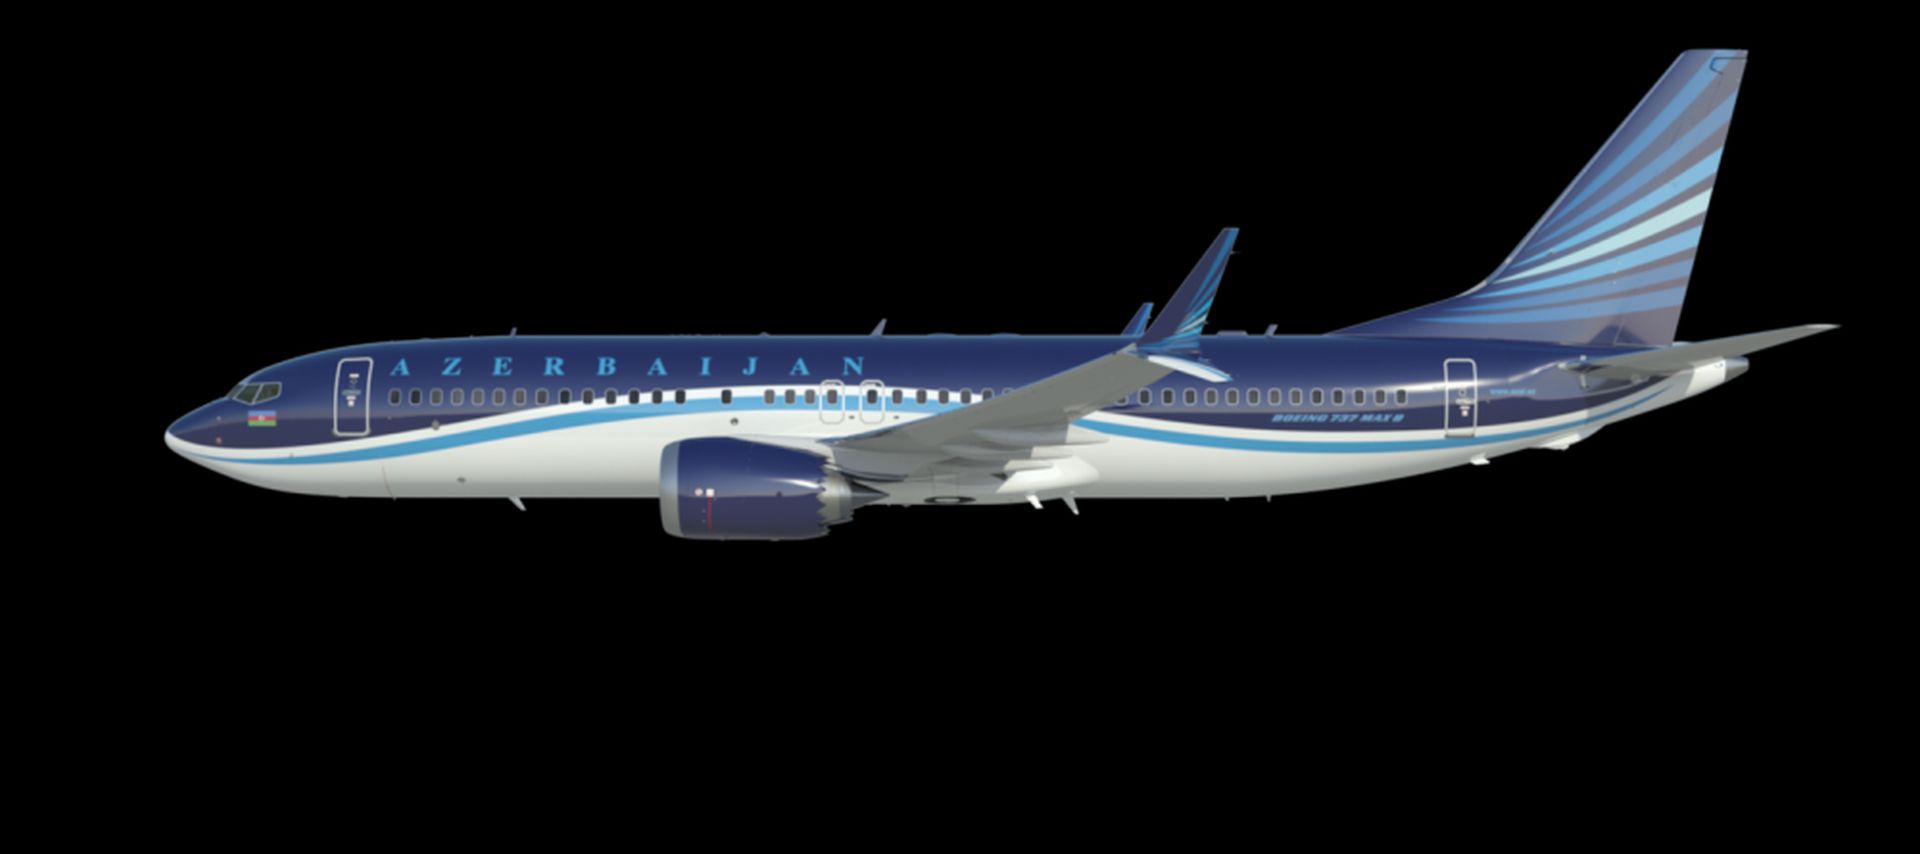 Vizualizace Boeingu 737 MAX 8 v barvách Azerbaijan Airlines. Foto: Boeing